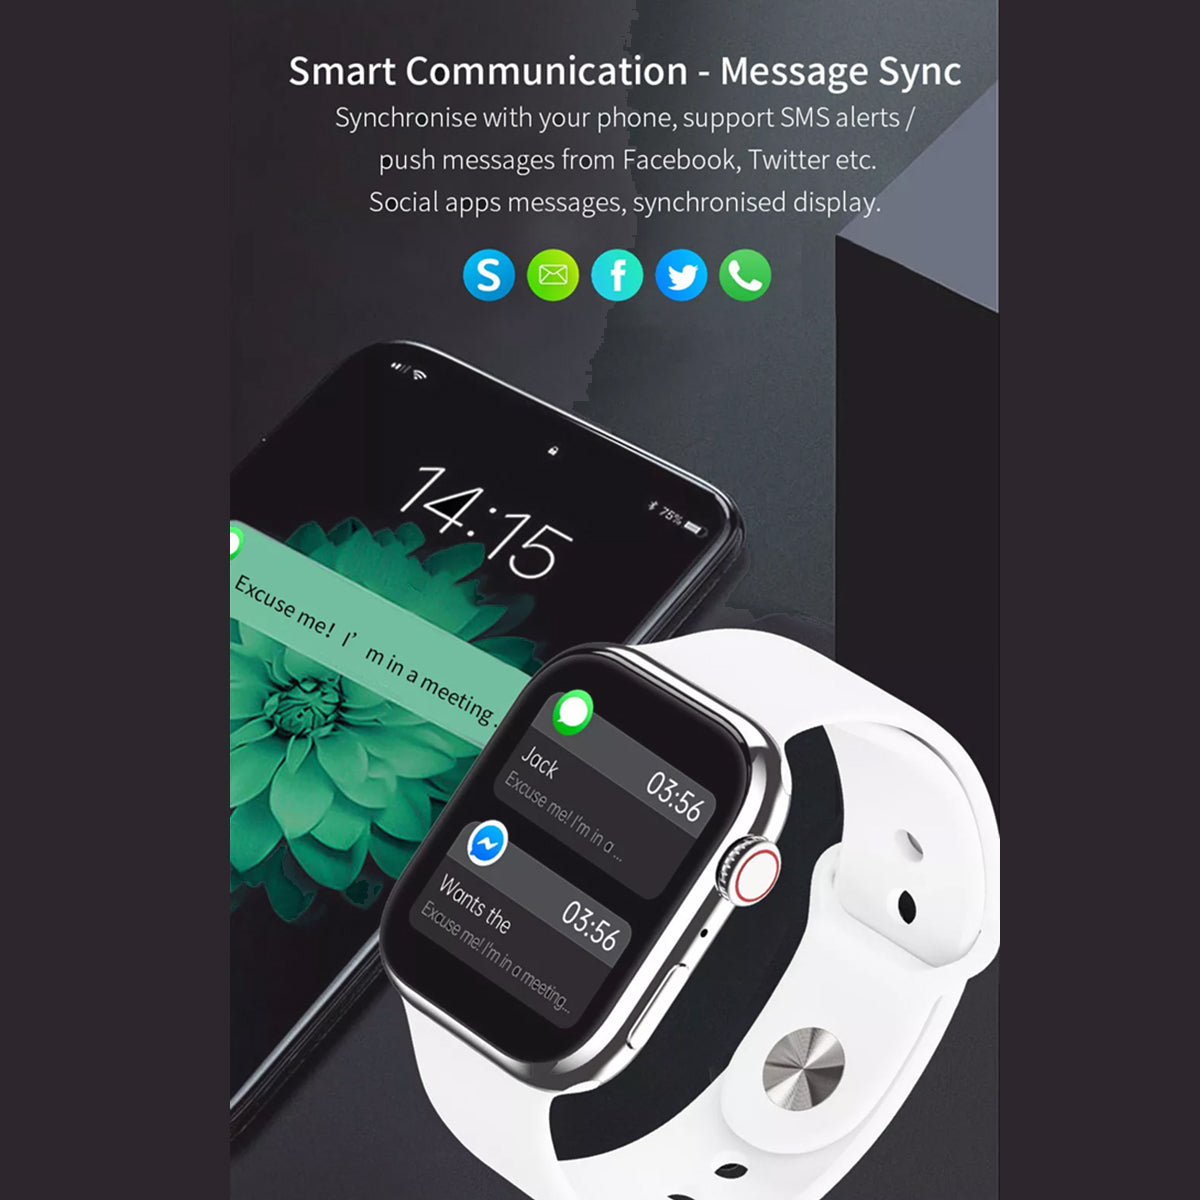 Smartwatch Reloj Inteligente Fralugio Lc205 Full Touch 1.99 Pulgadas